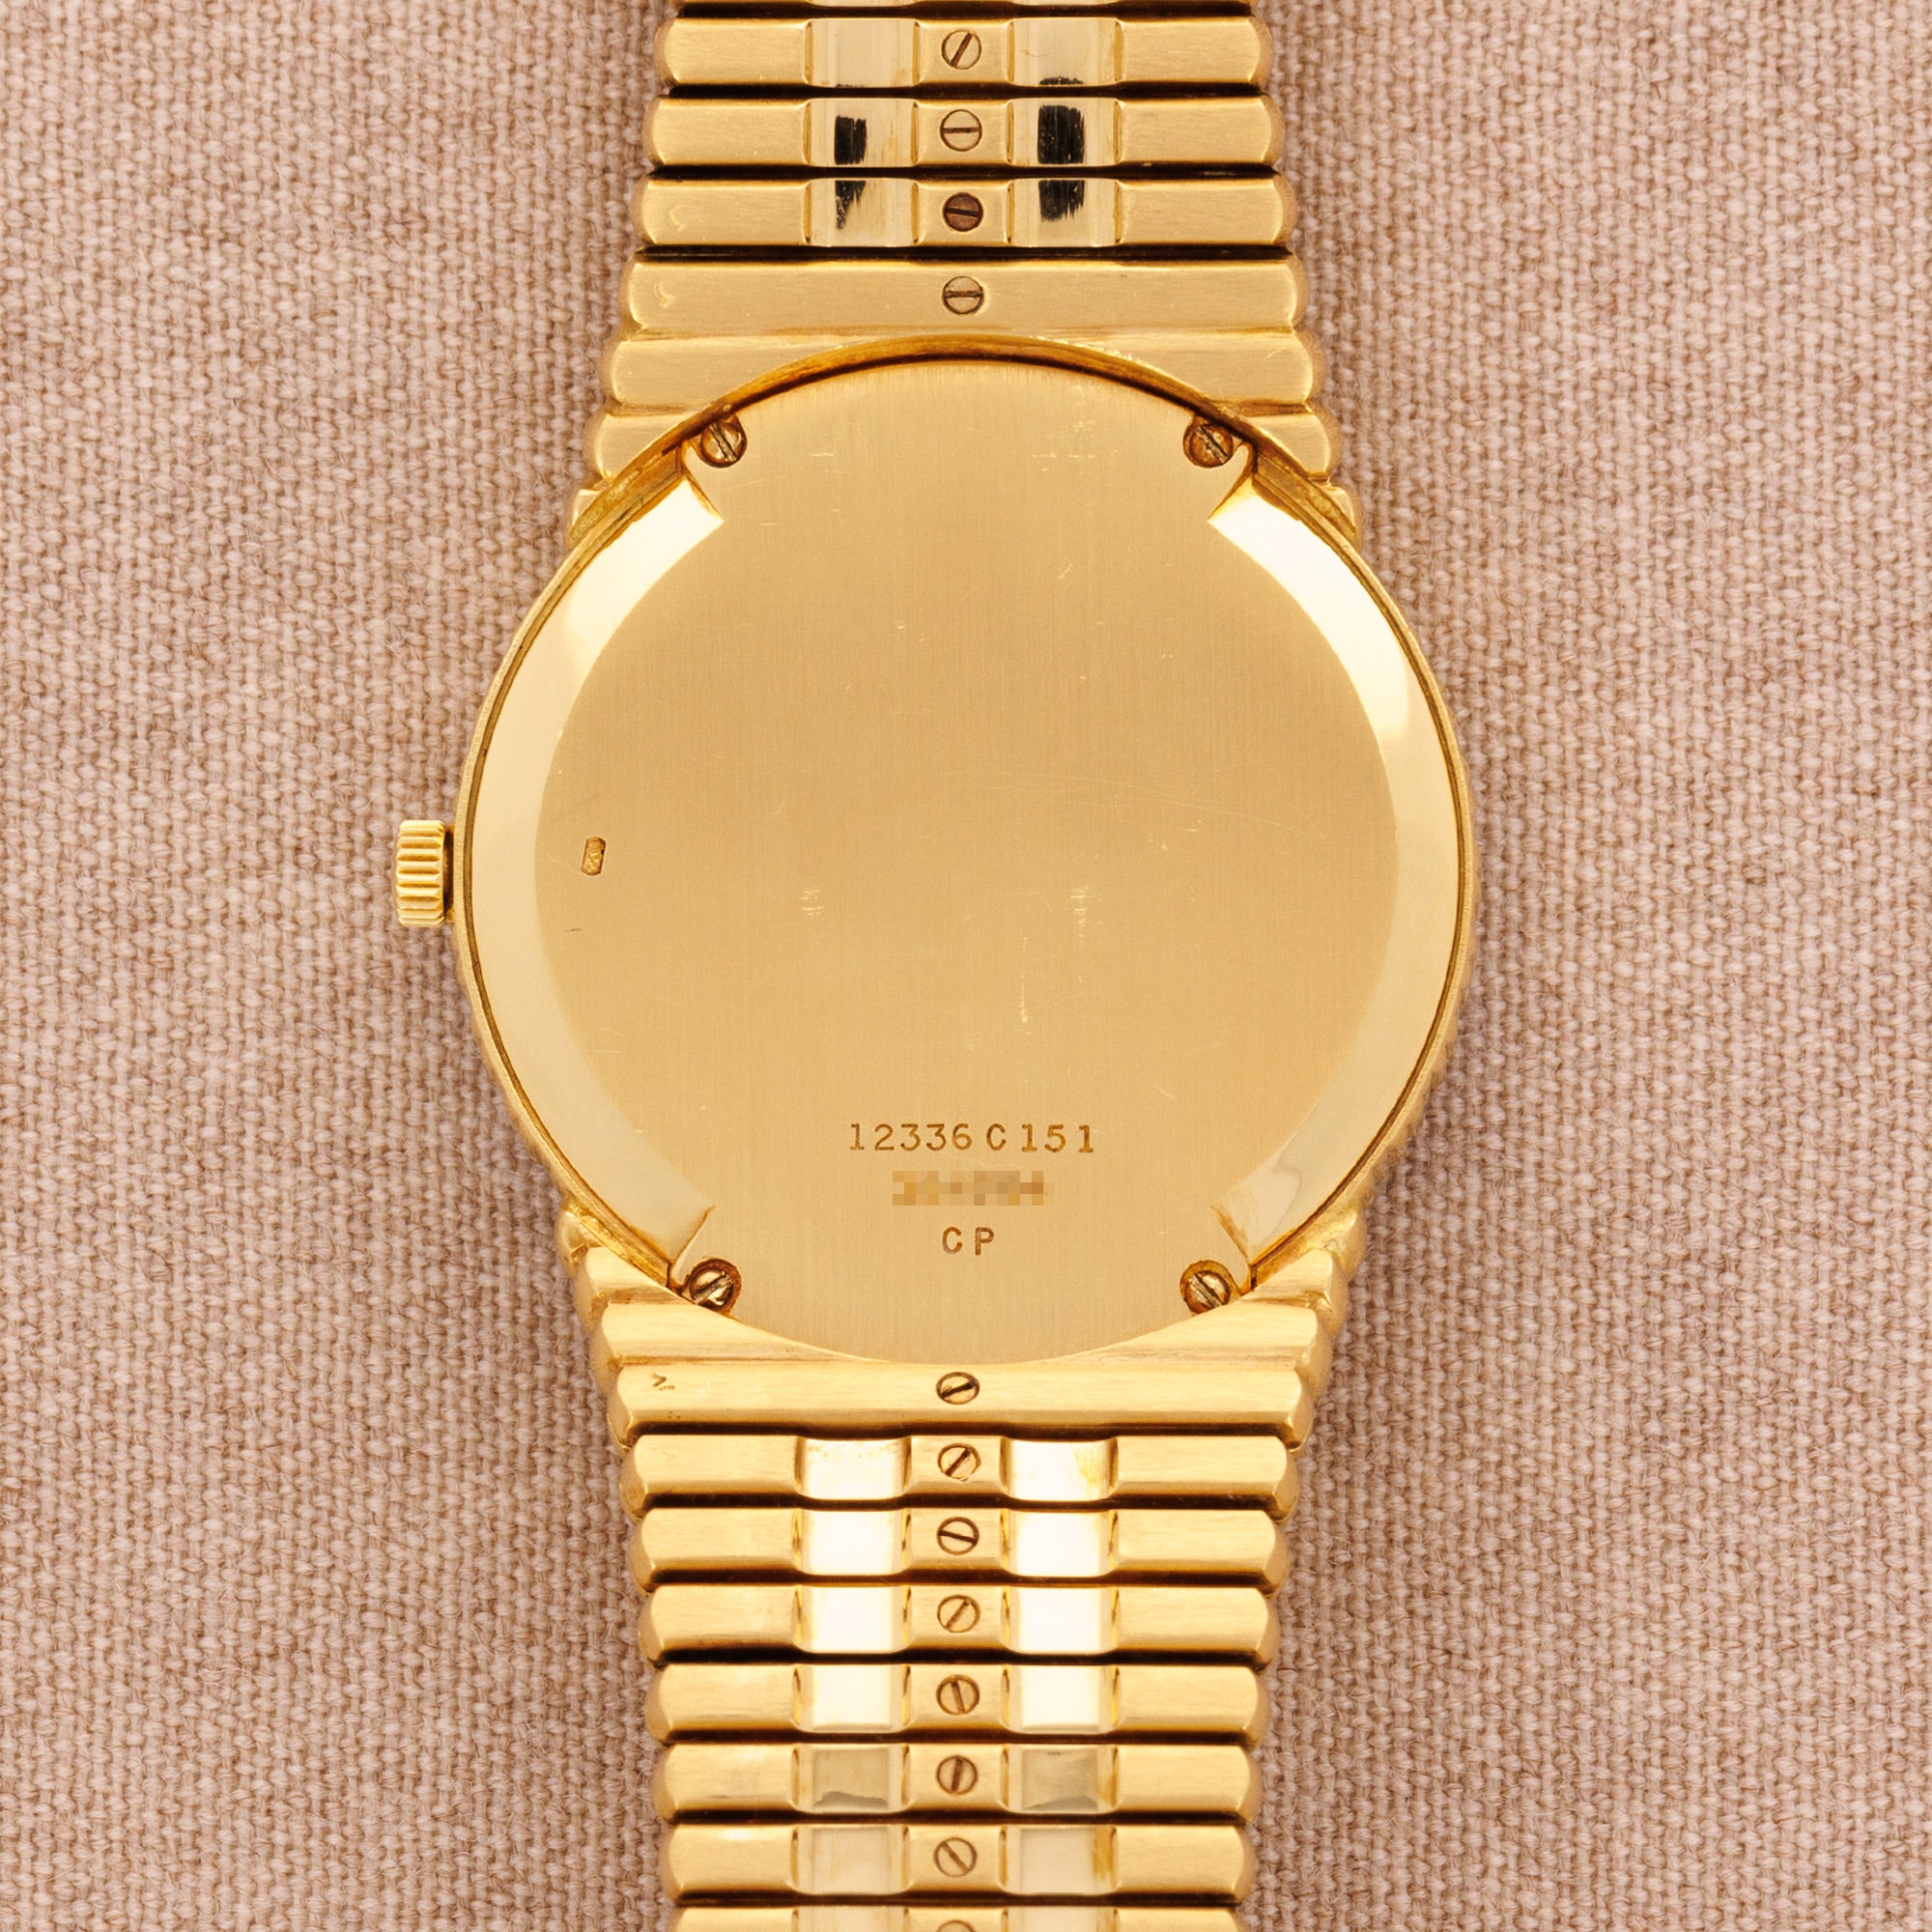 Piaget - Piaget Yellow Gold Emperador Diamond Watch Ref. 12336 - The Keystone Watches